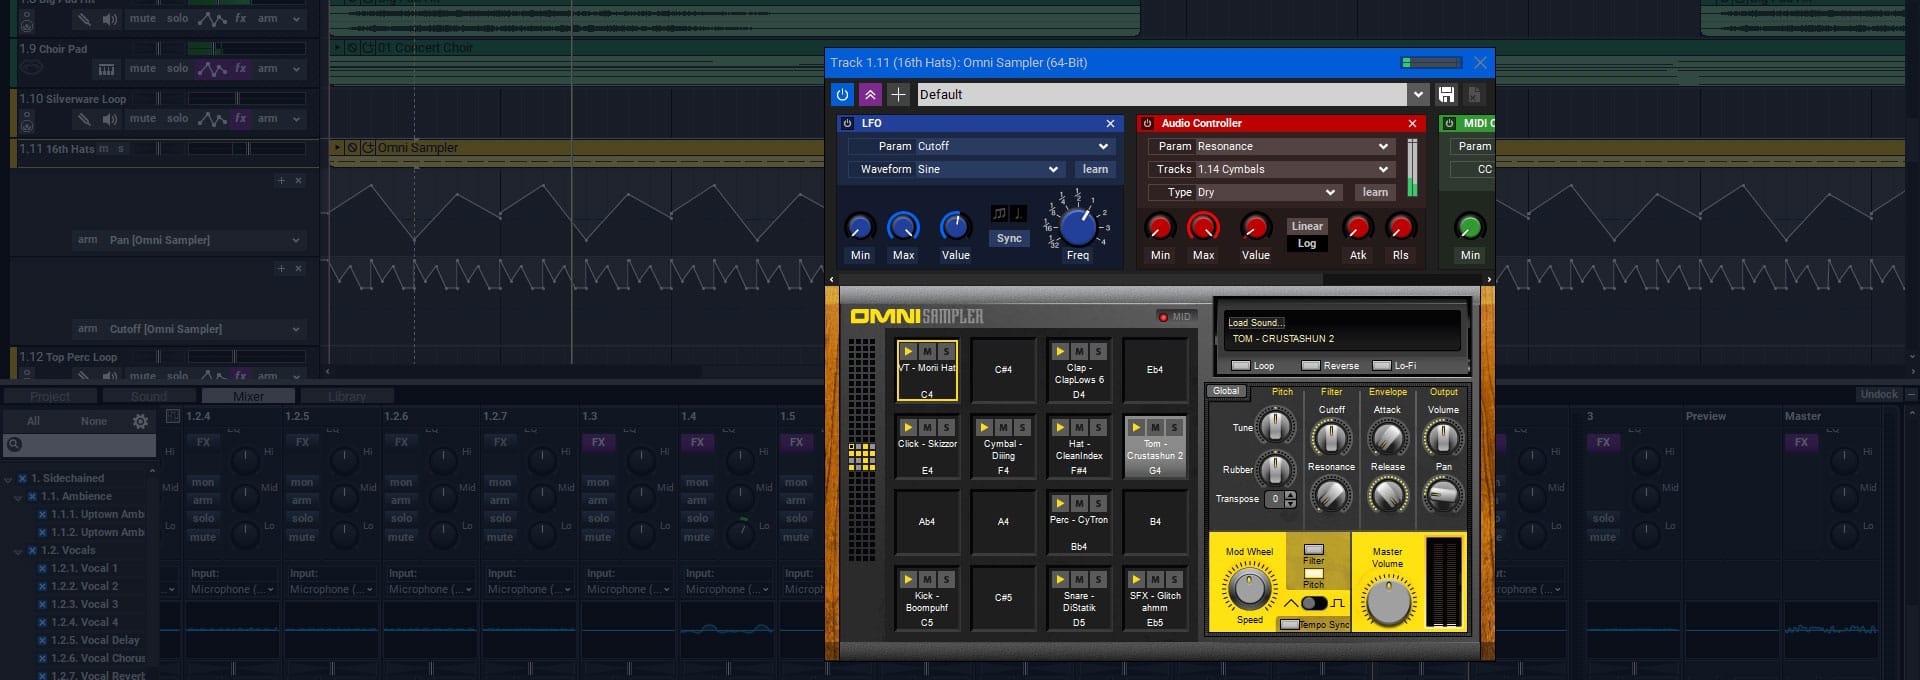 Mixcraft 9 Studio Advanced Routing & Control